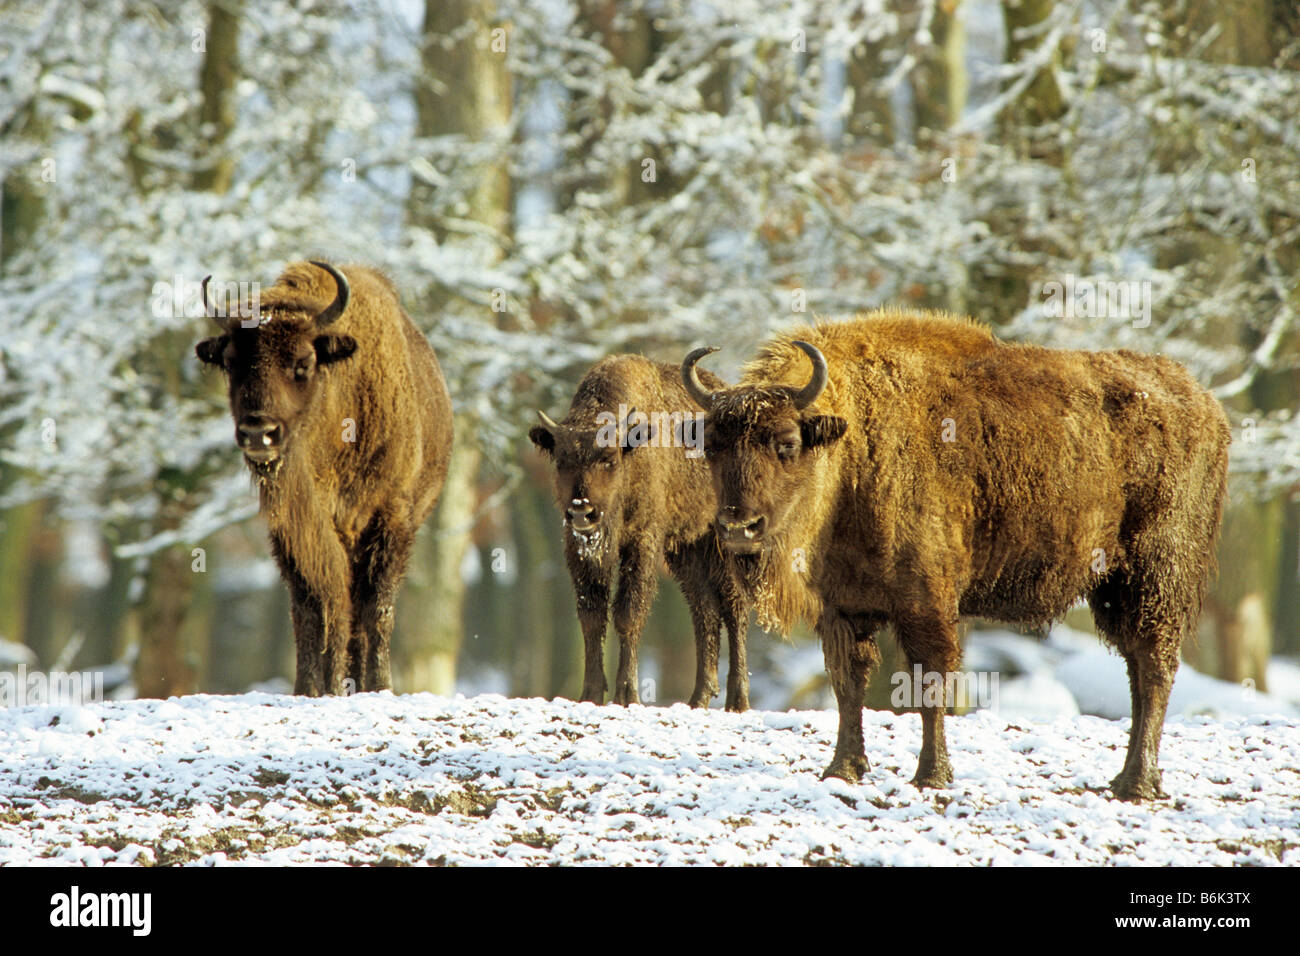 European Bison (Bison bonasus), three individuals on snow Stock Photo